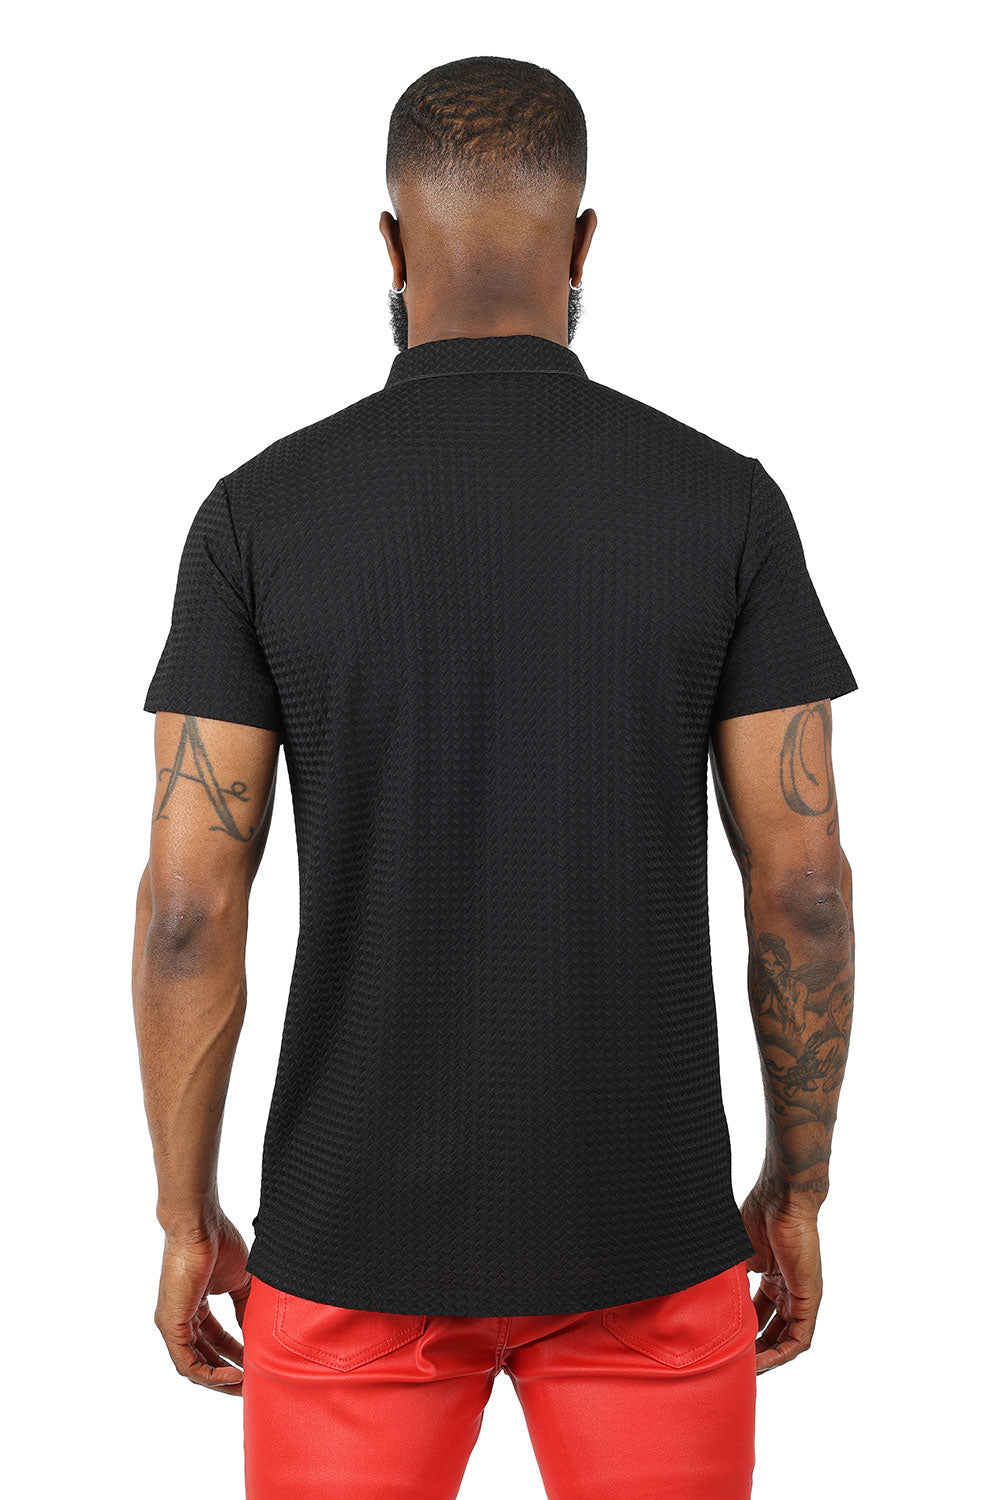 Barabas Men's  Geometric Silky Stretch Short Sleeve Polo Shirts 2PP830 Black